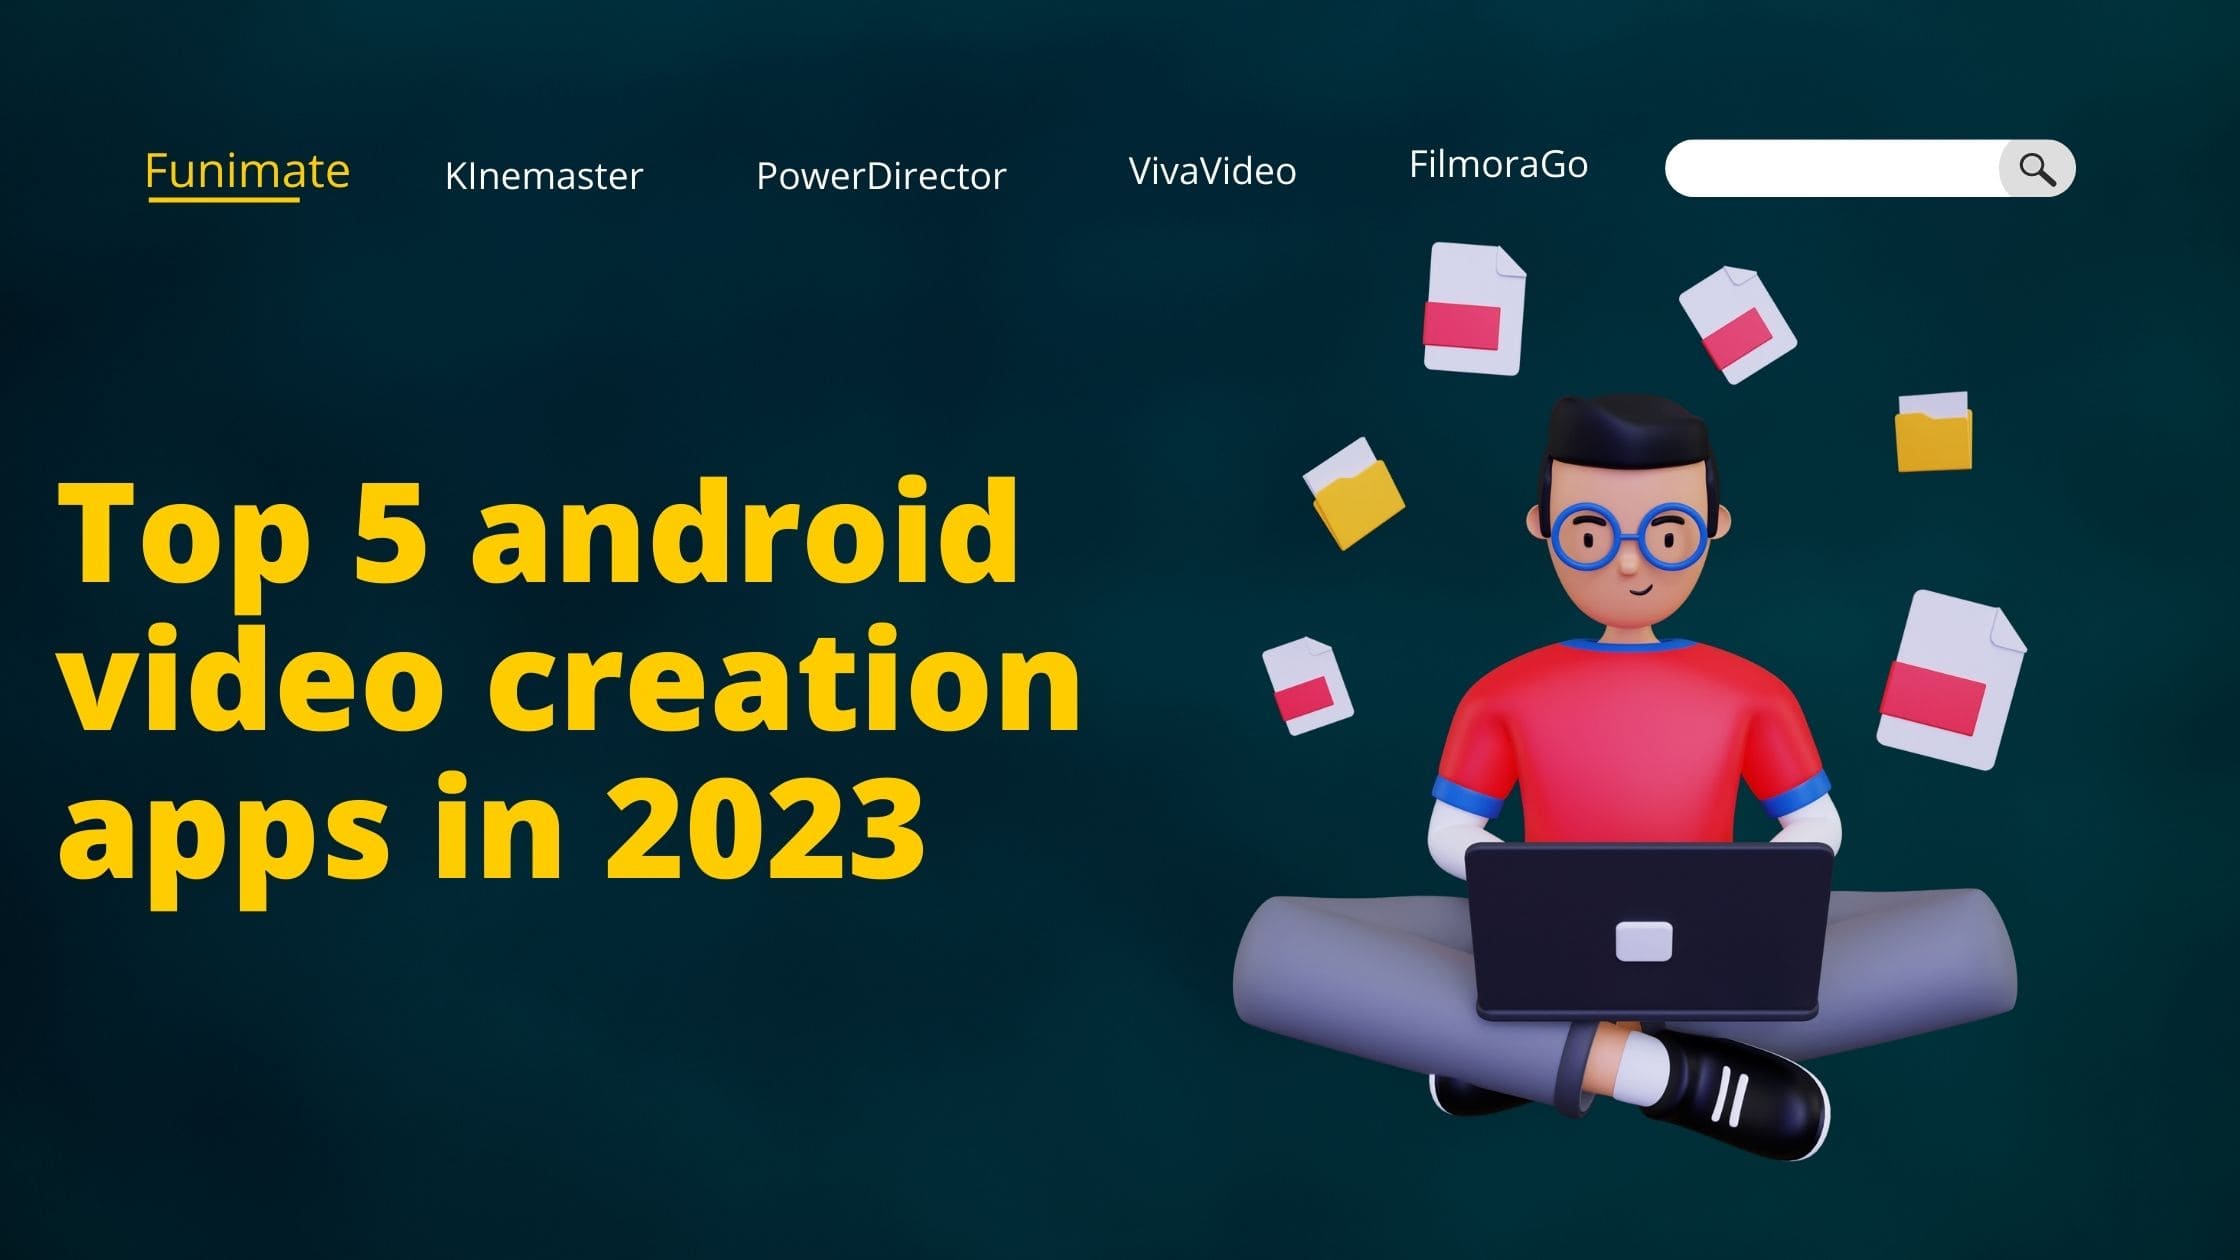 Top 5 Video Creation App 2023